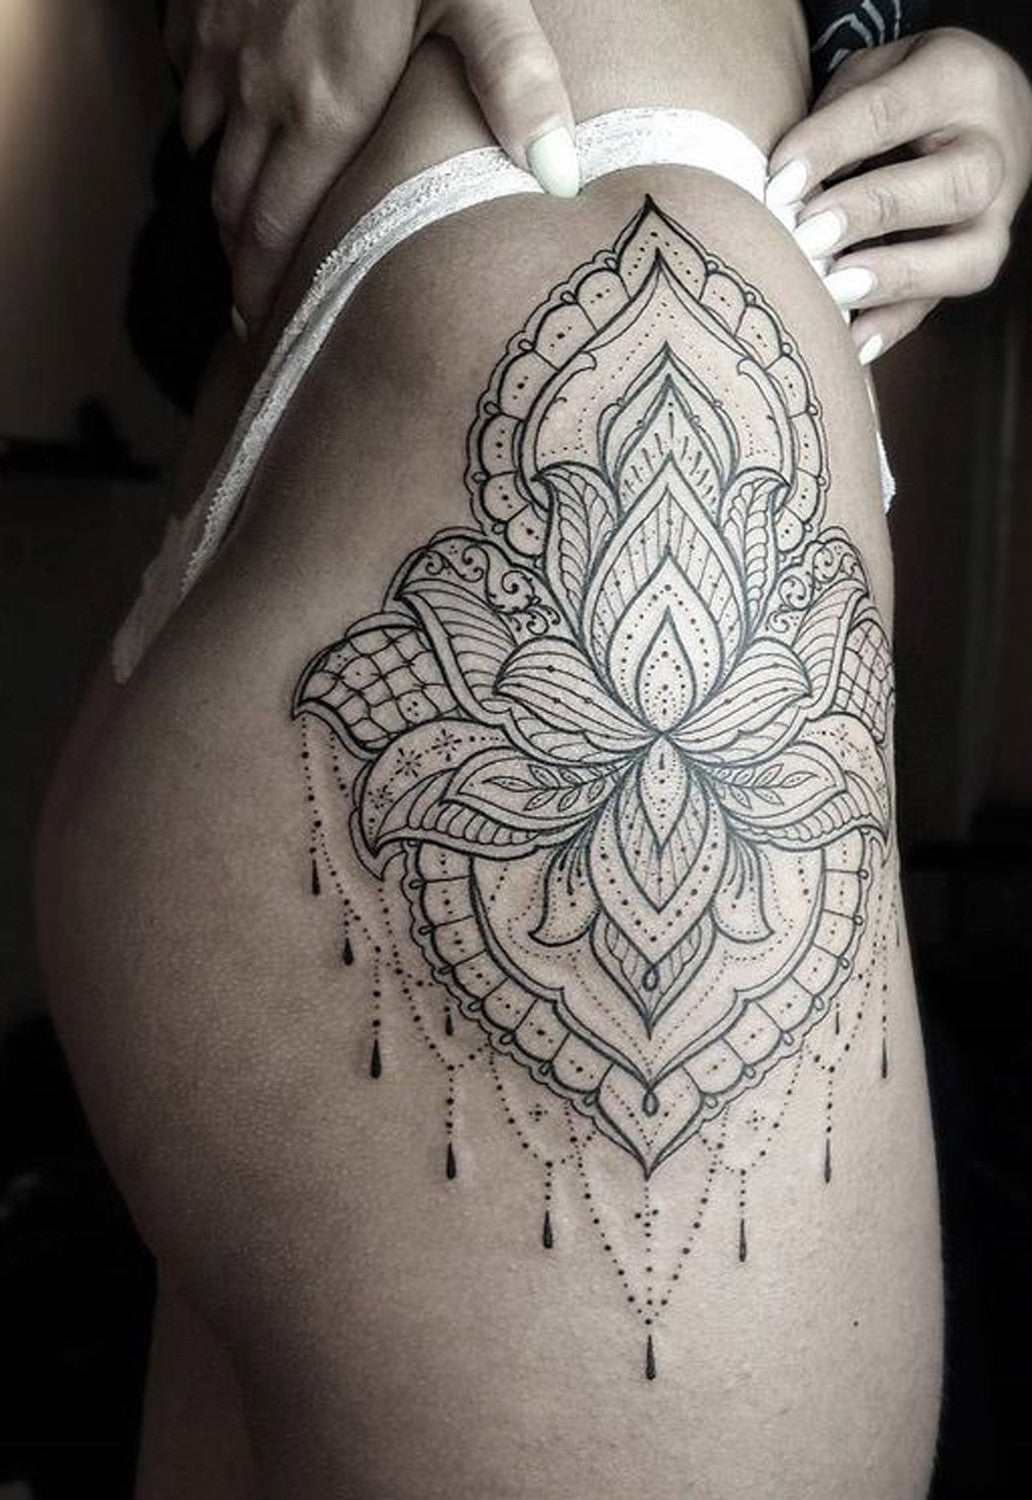 Lotus Lace Thigh Tattoo Ideas at MyBodiArt.com